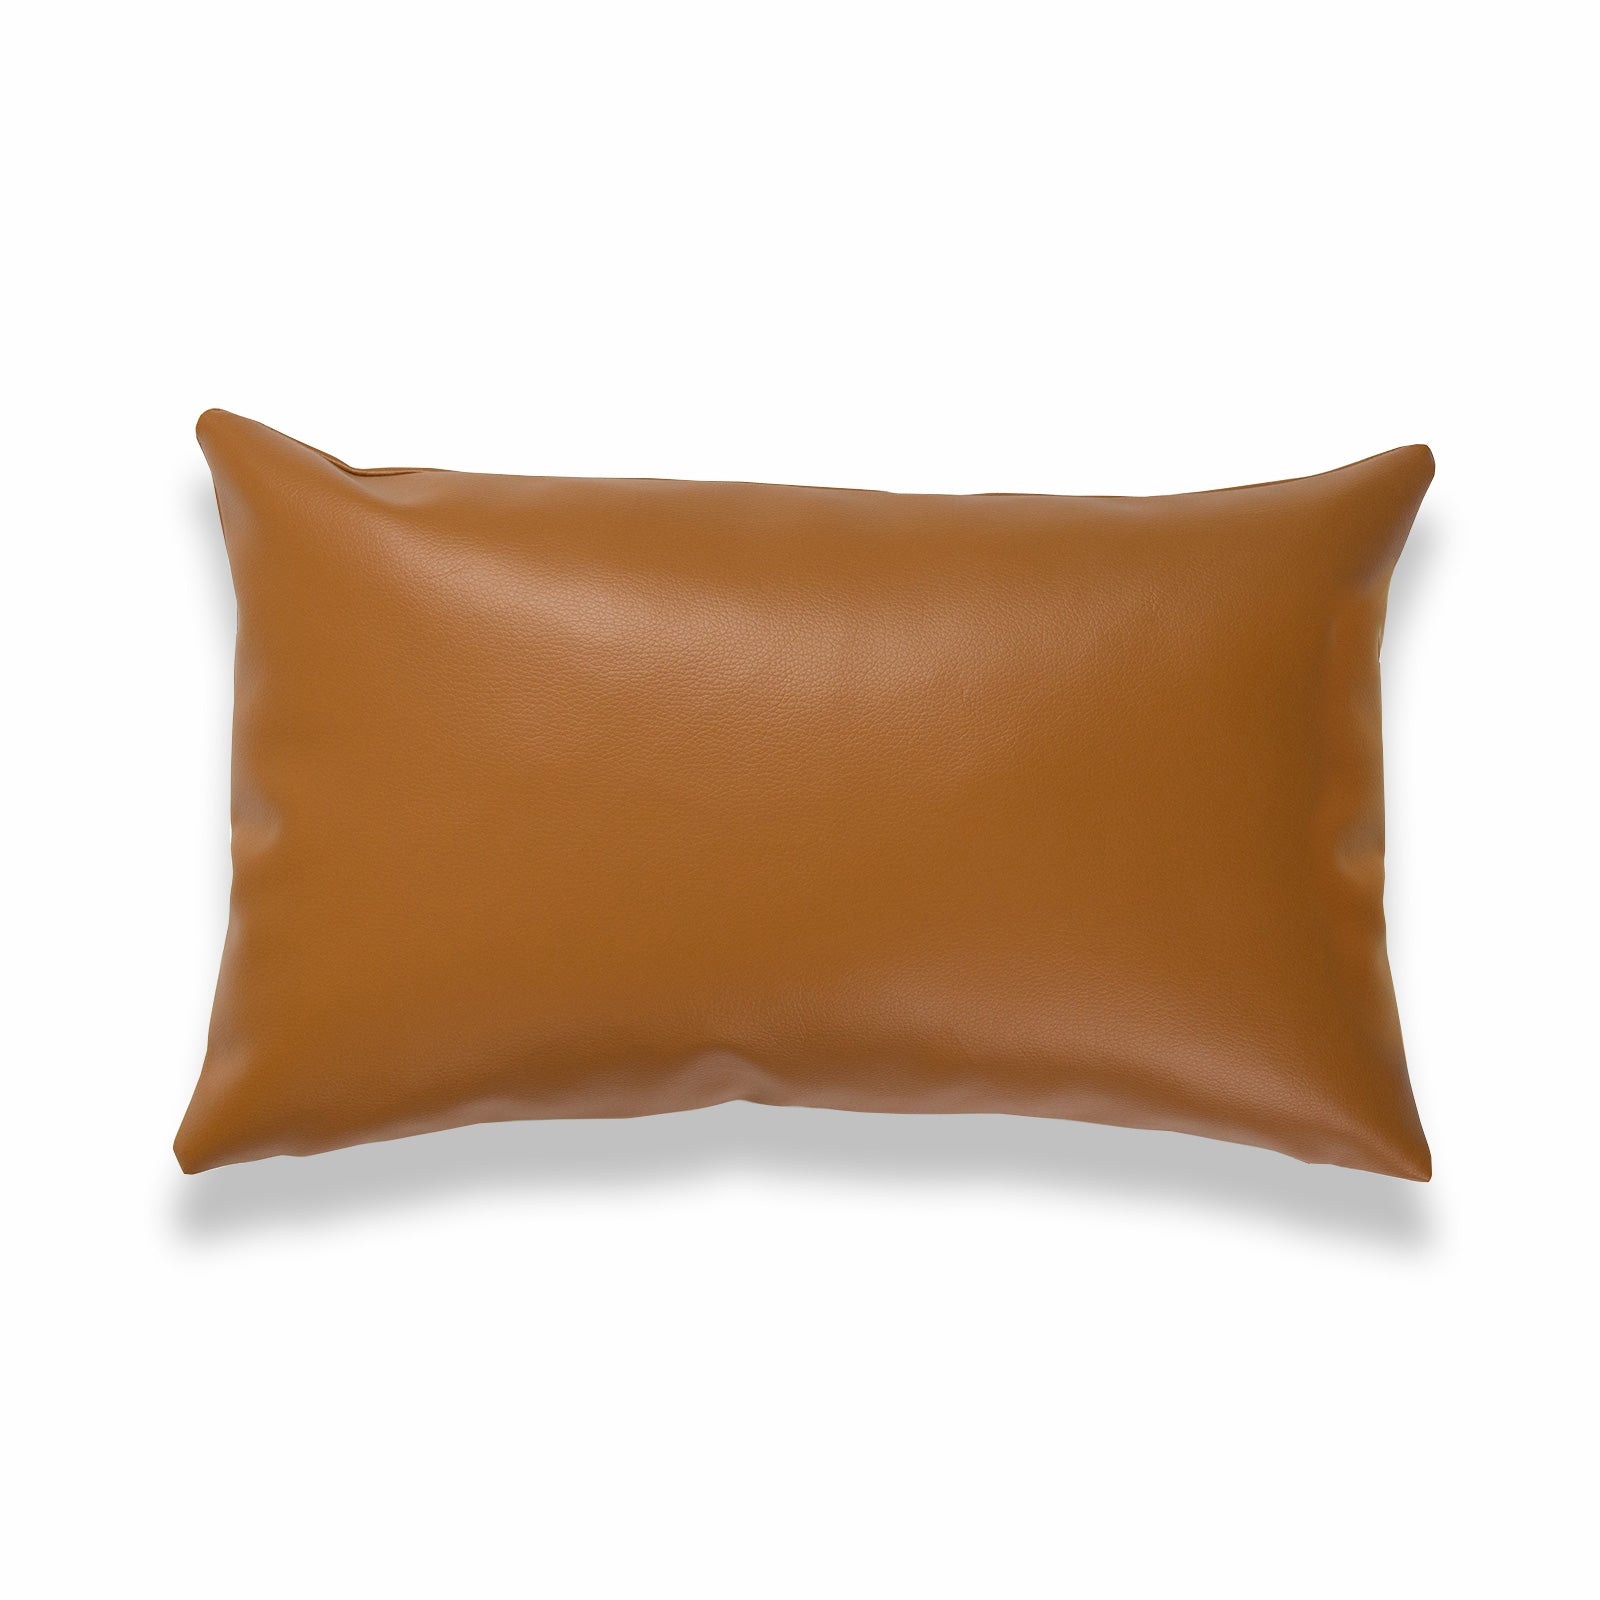 Faux Leather Lumbar Pillow Cover, Modern Design, Camel, 12"x20"